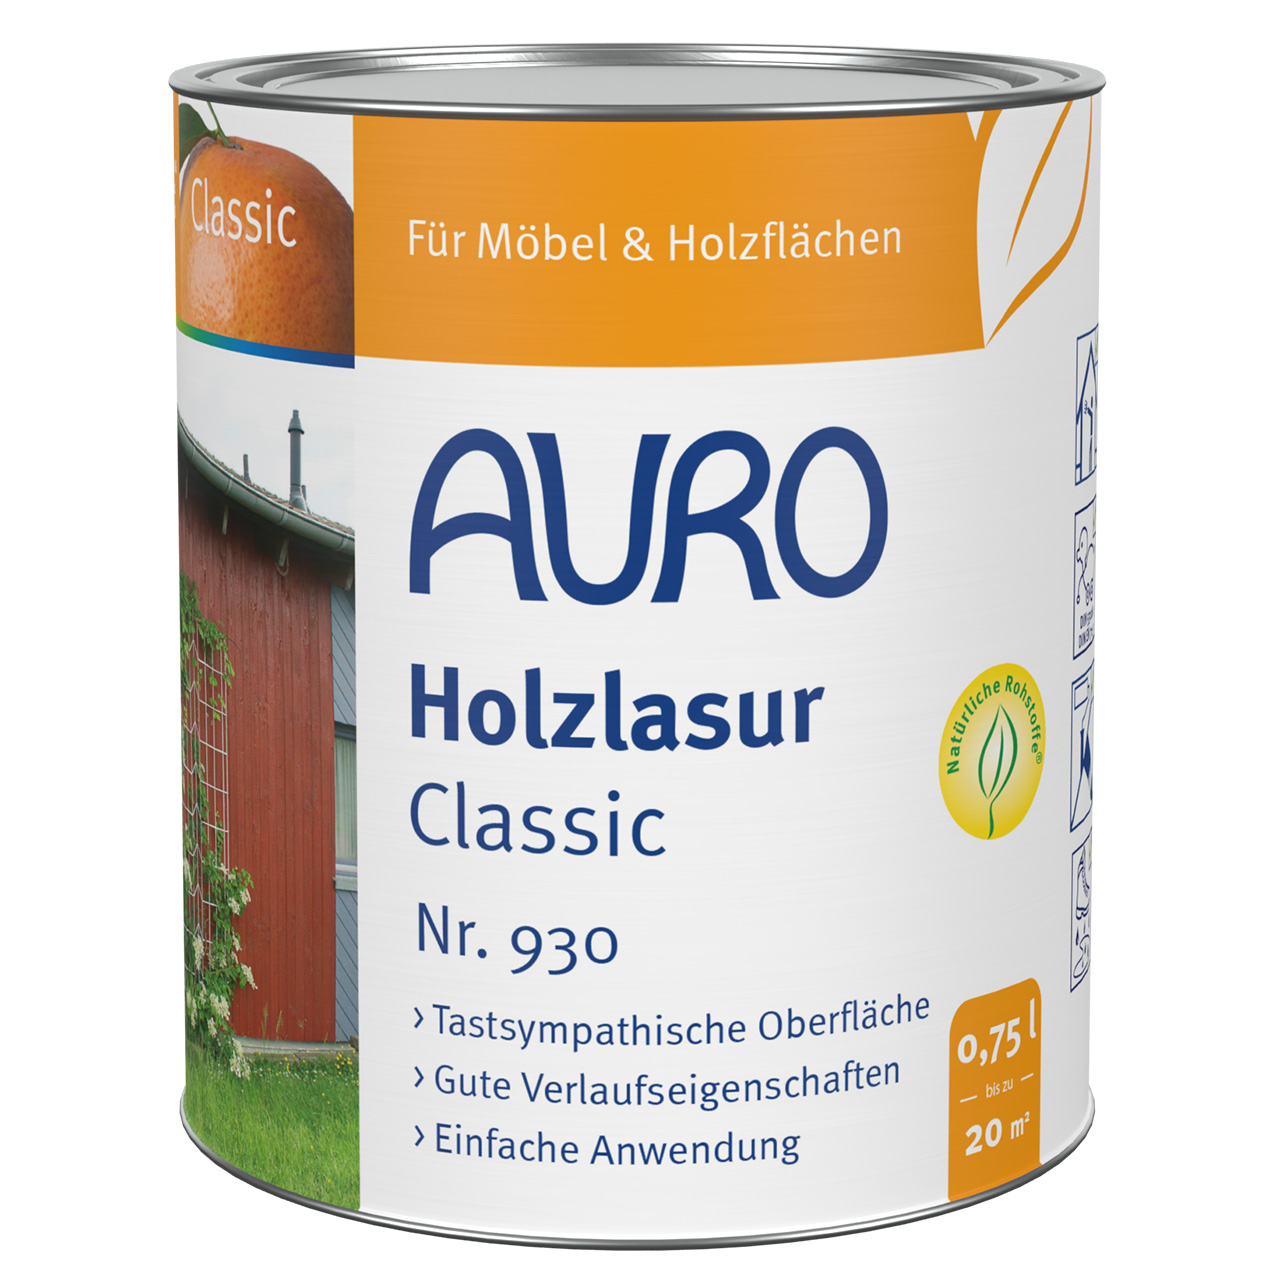 AURO Holzlasur Classic Nr. 930